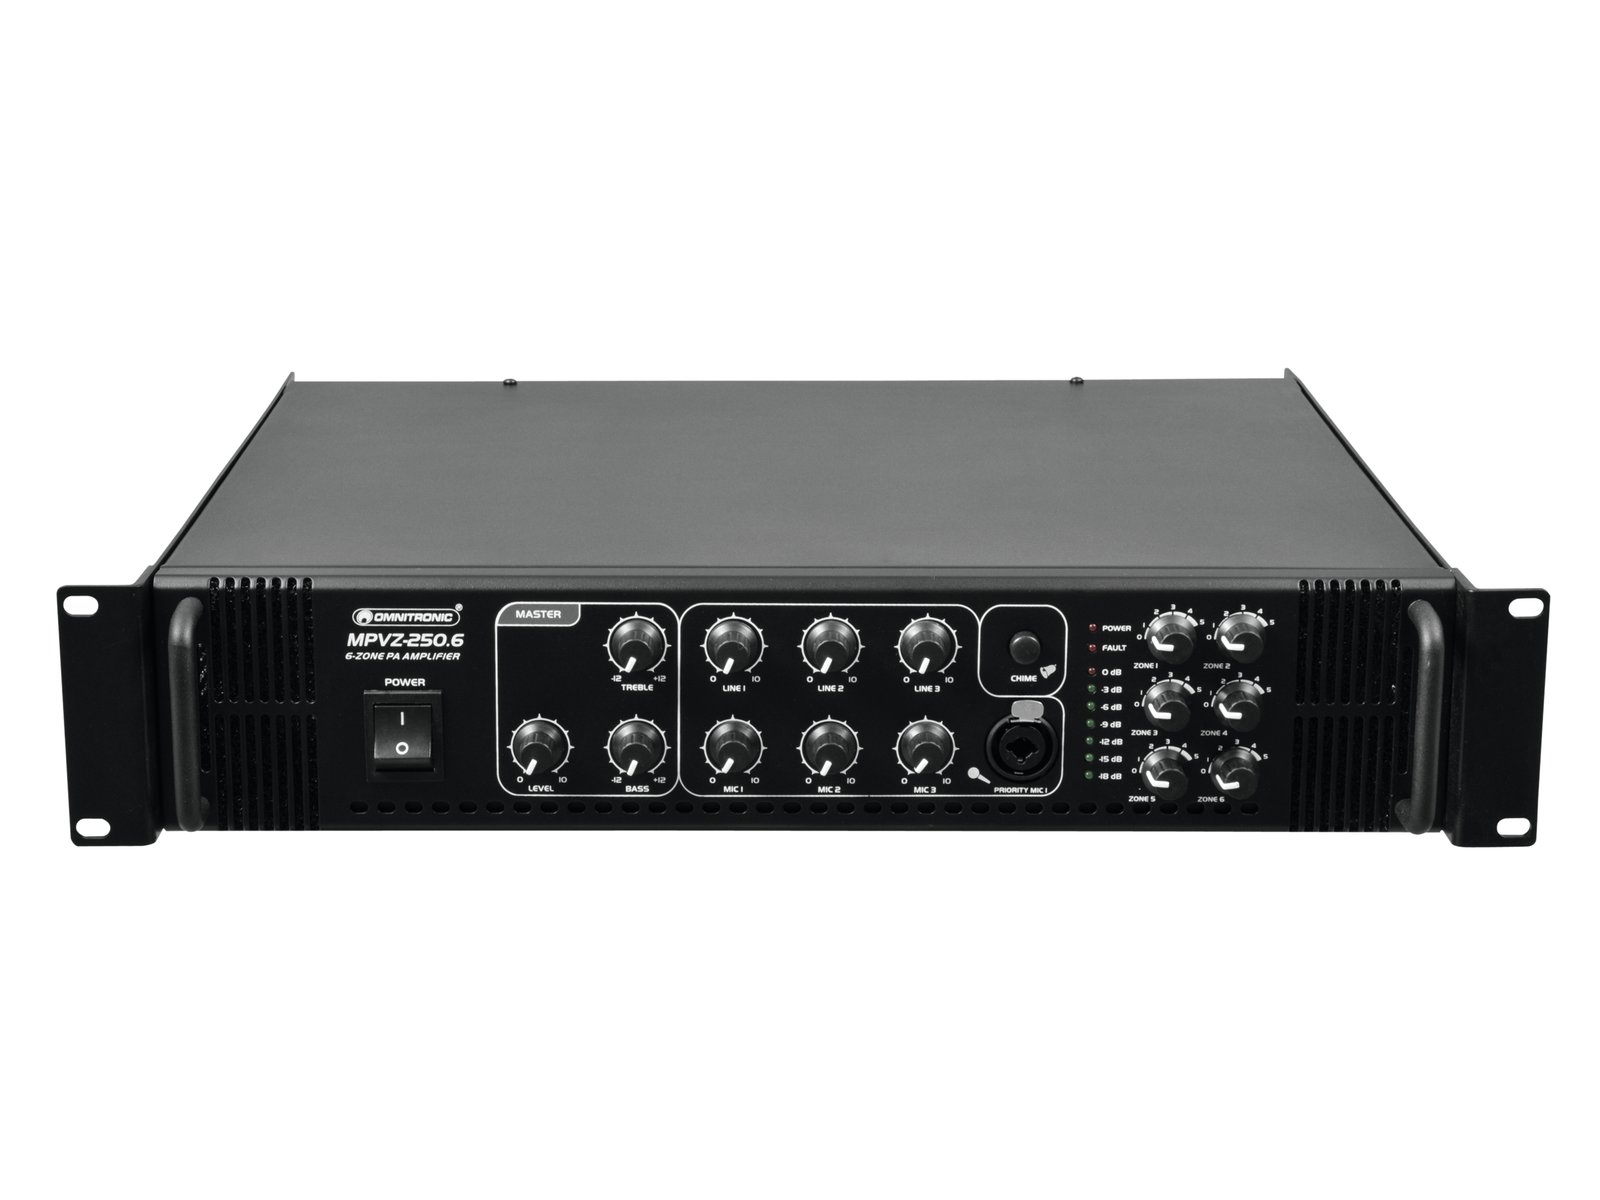 AMPLI MPVZ-120 OMNITRONIC 6Z, 120W 70V,100V 4-16ohm MP3,SD,USB,CHIME